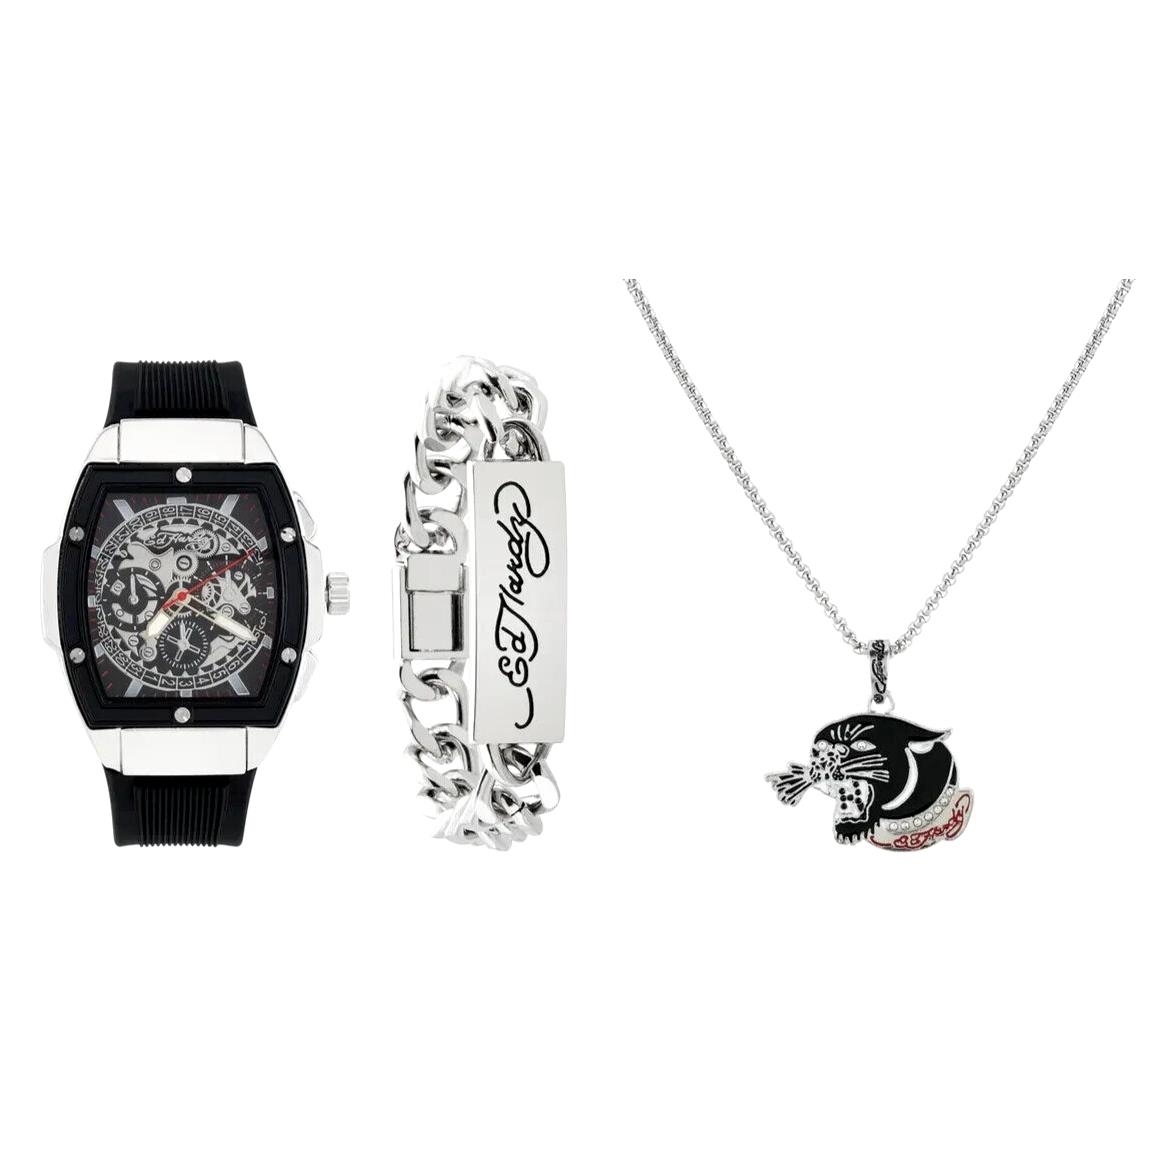 ED Hardy 48mm Quartz Watch Silicone Strap ID Bracelet Necklace Gift Set